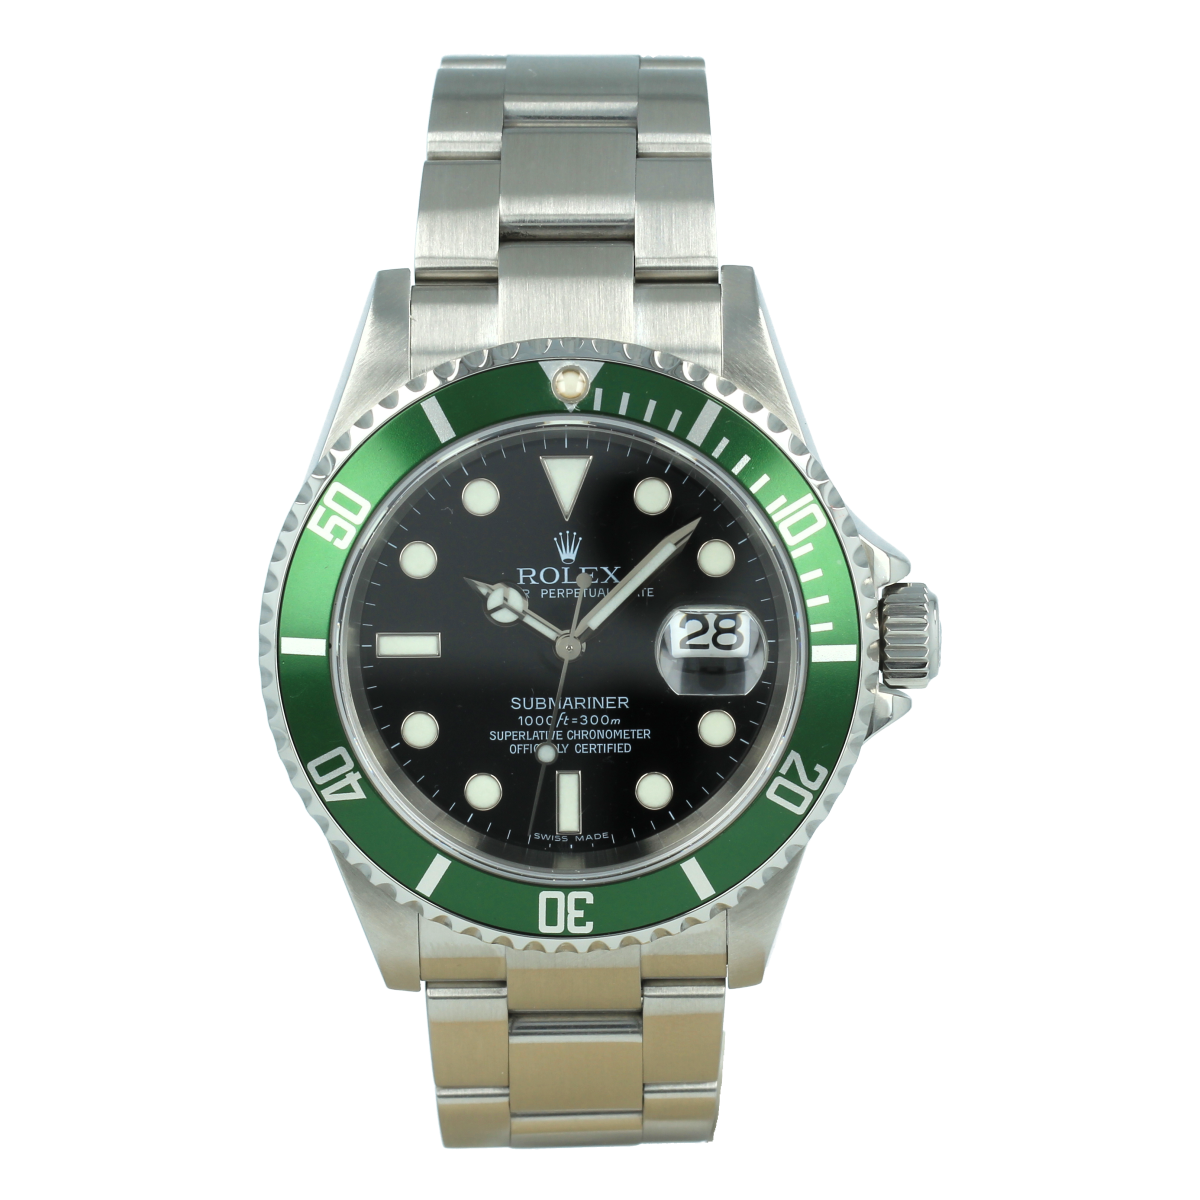 Rolex Submariner Date 16610LV “Kermit (2007) | Comprar reloj Rolex de segunda mano